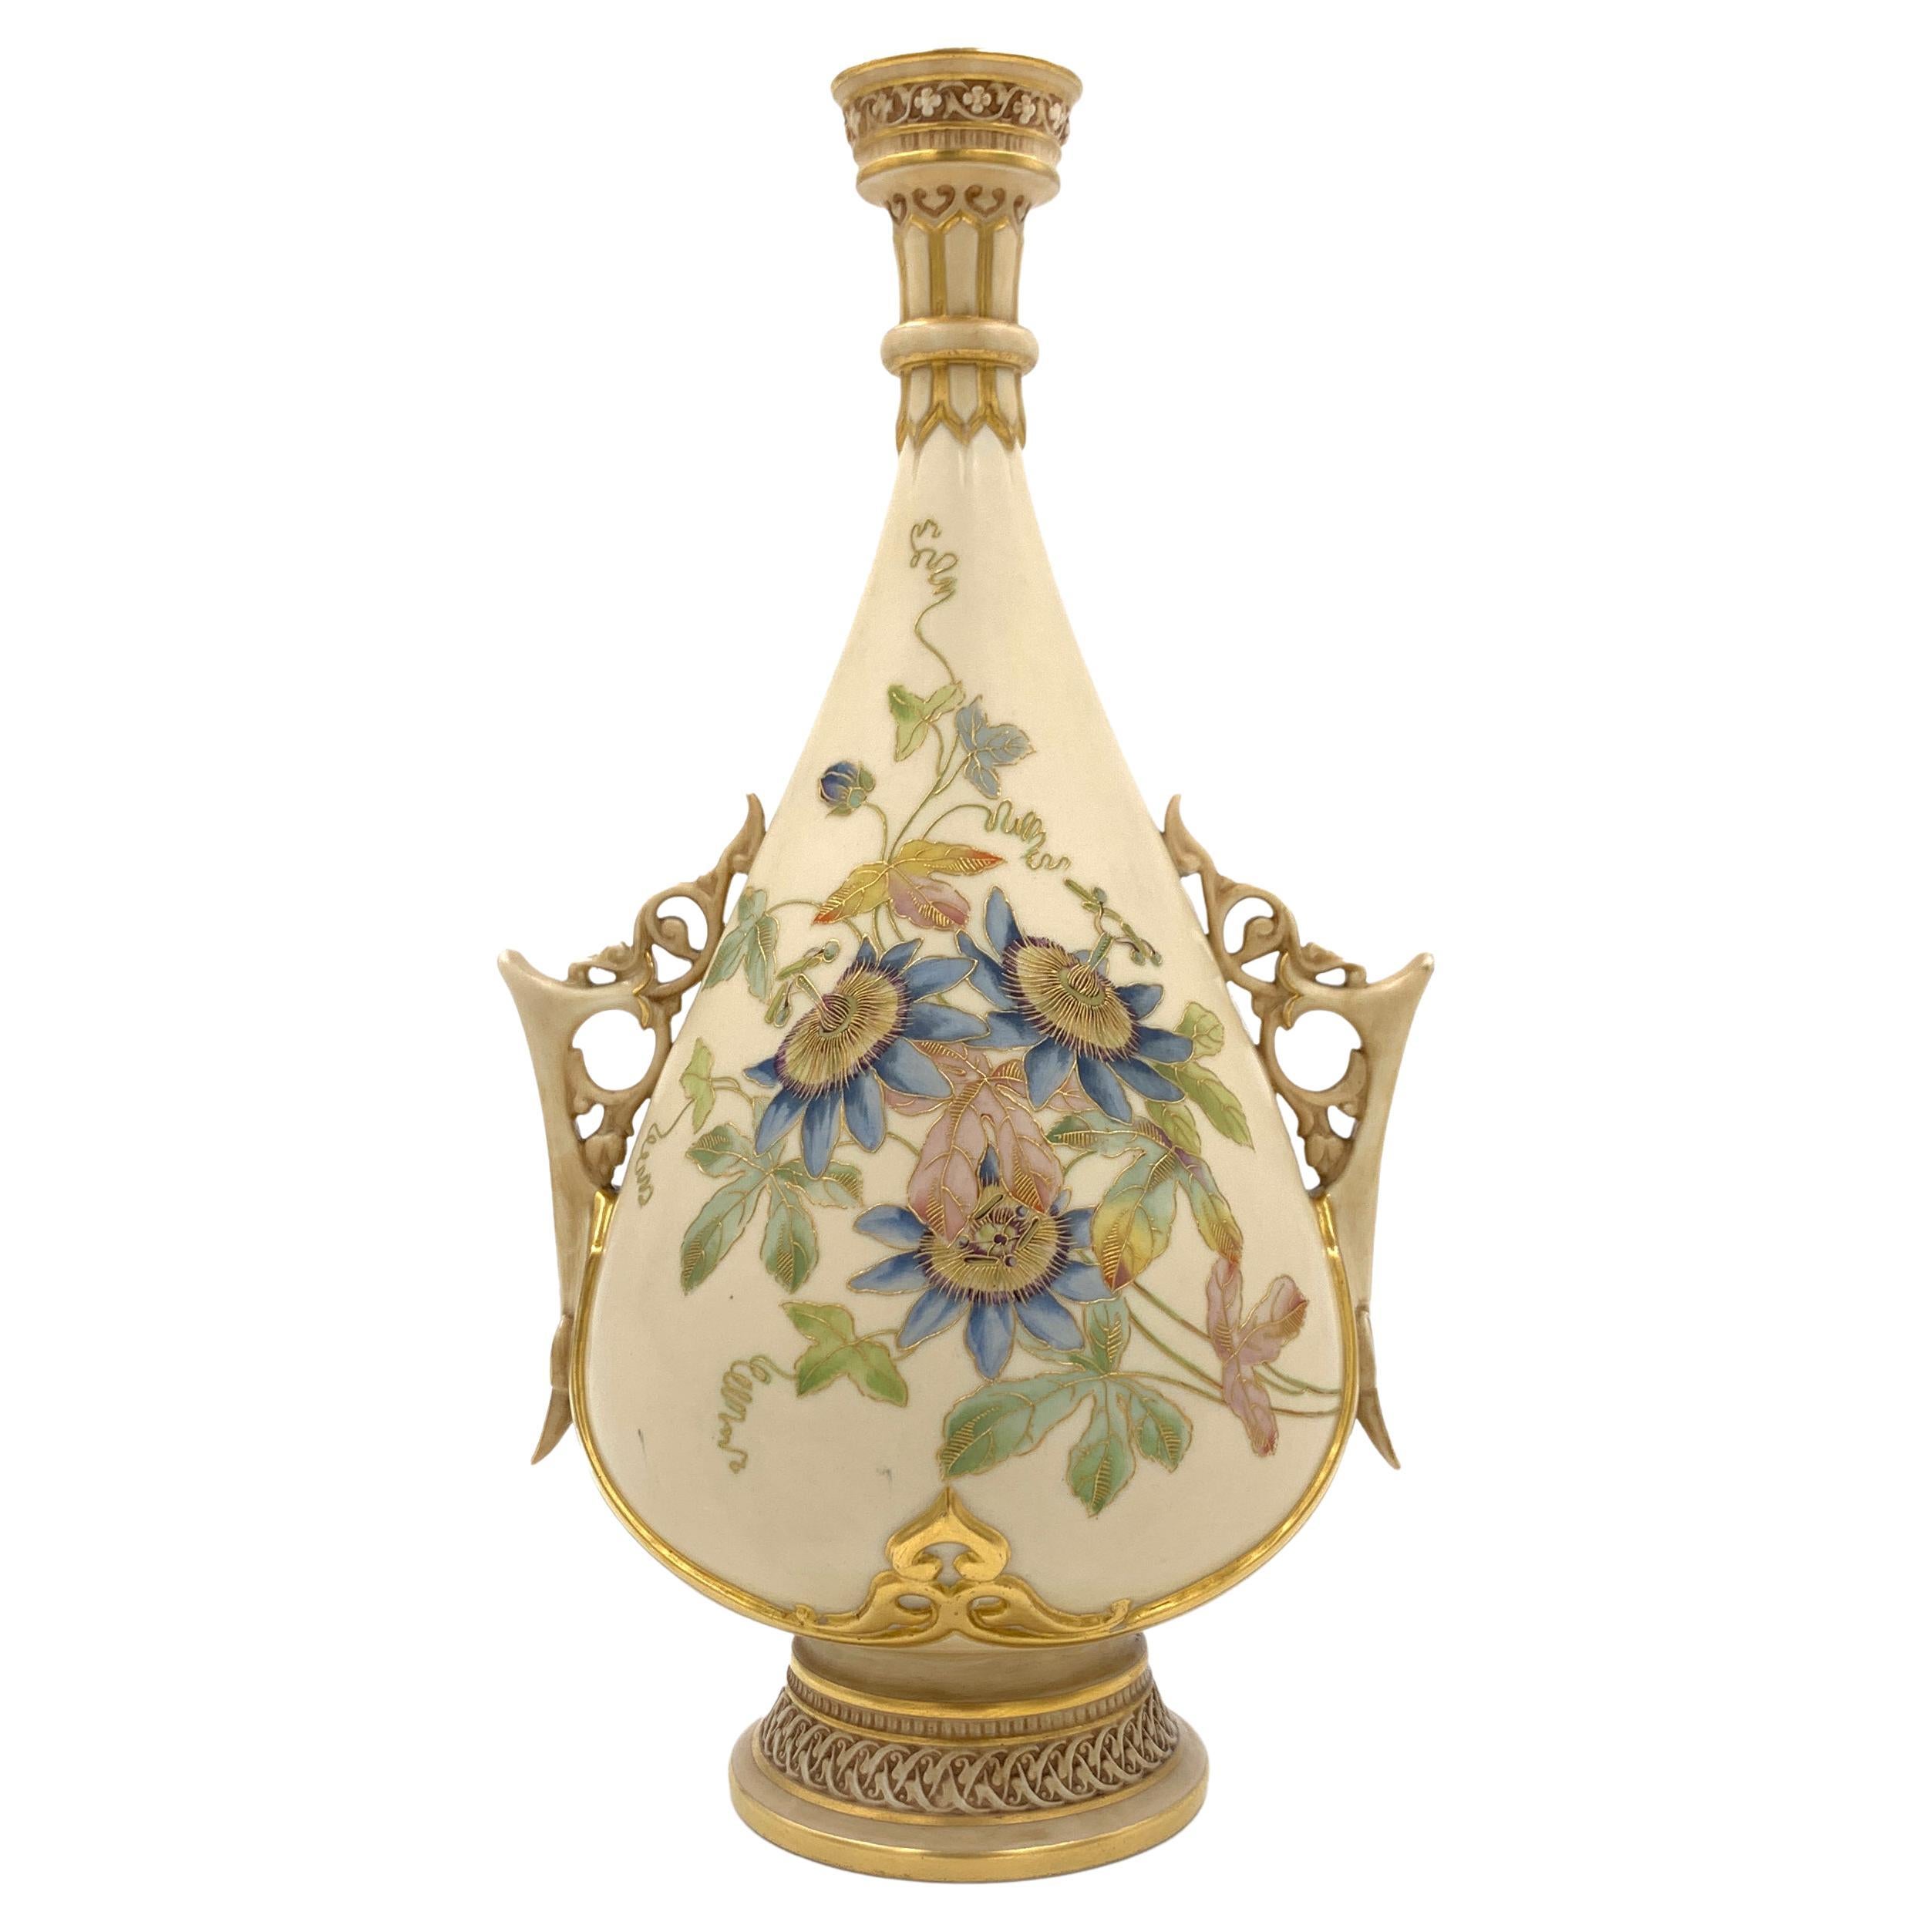 Late 19th Century Royal Worcester Ceramic Bud Vase